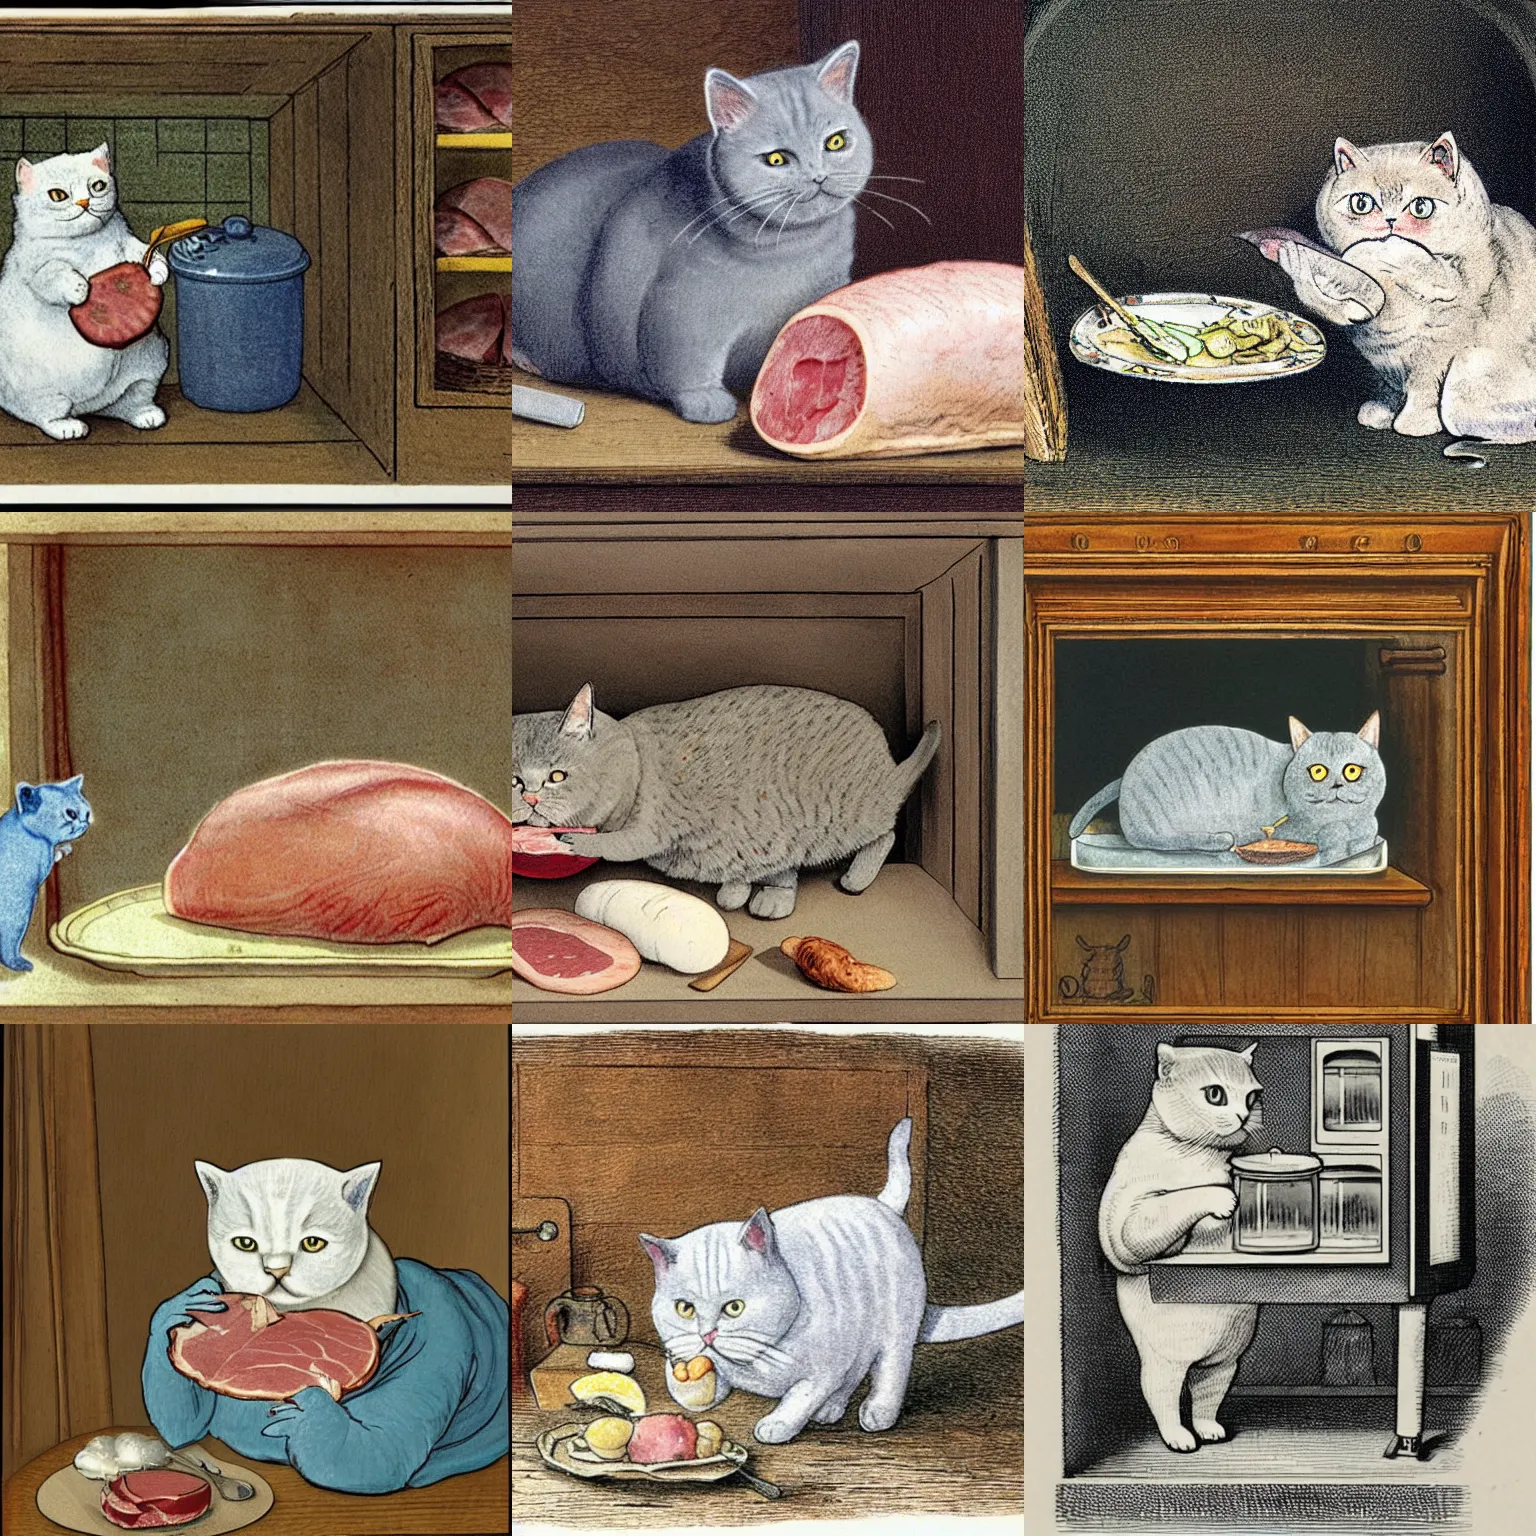 Prompt: british blue shorthair cat eating a large ham, in a fridge, illustration by beatrix potter